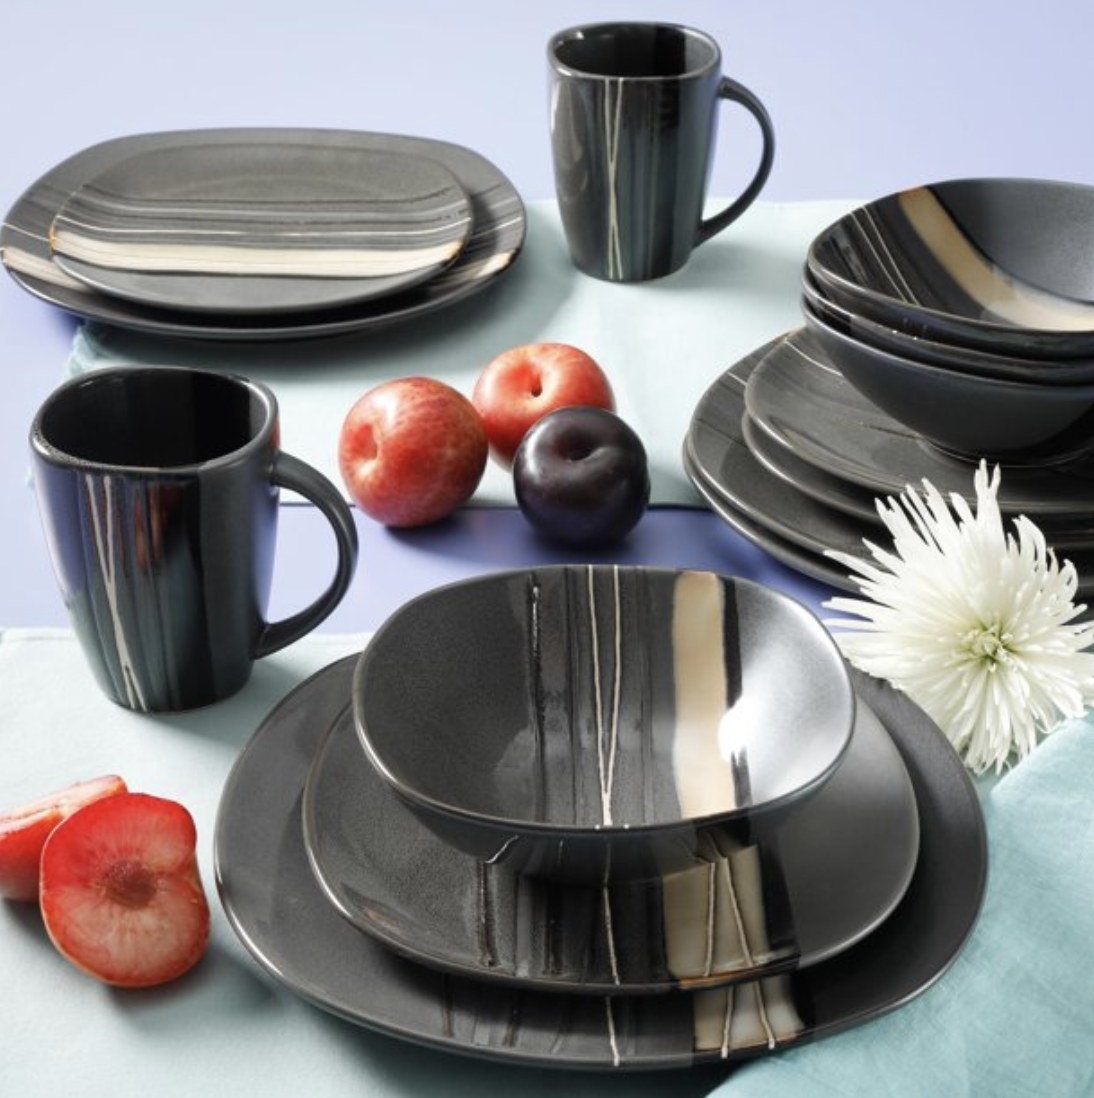 The black marble-like dish set 